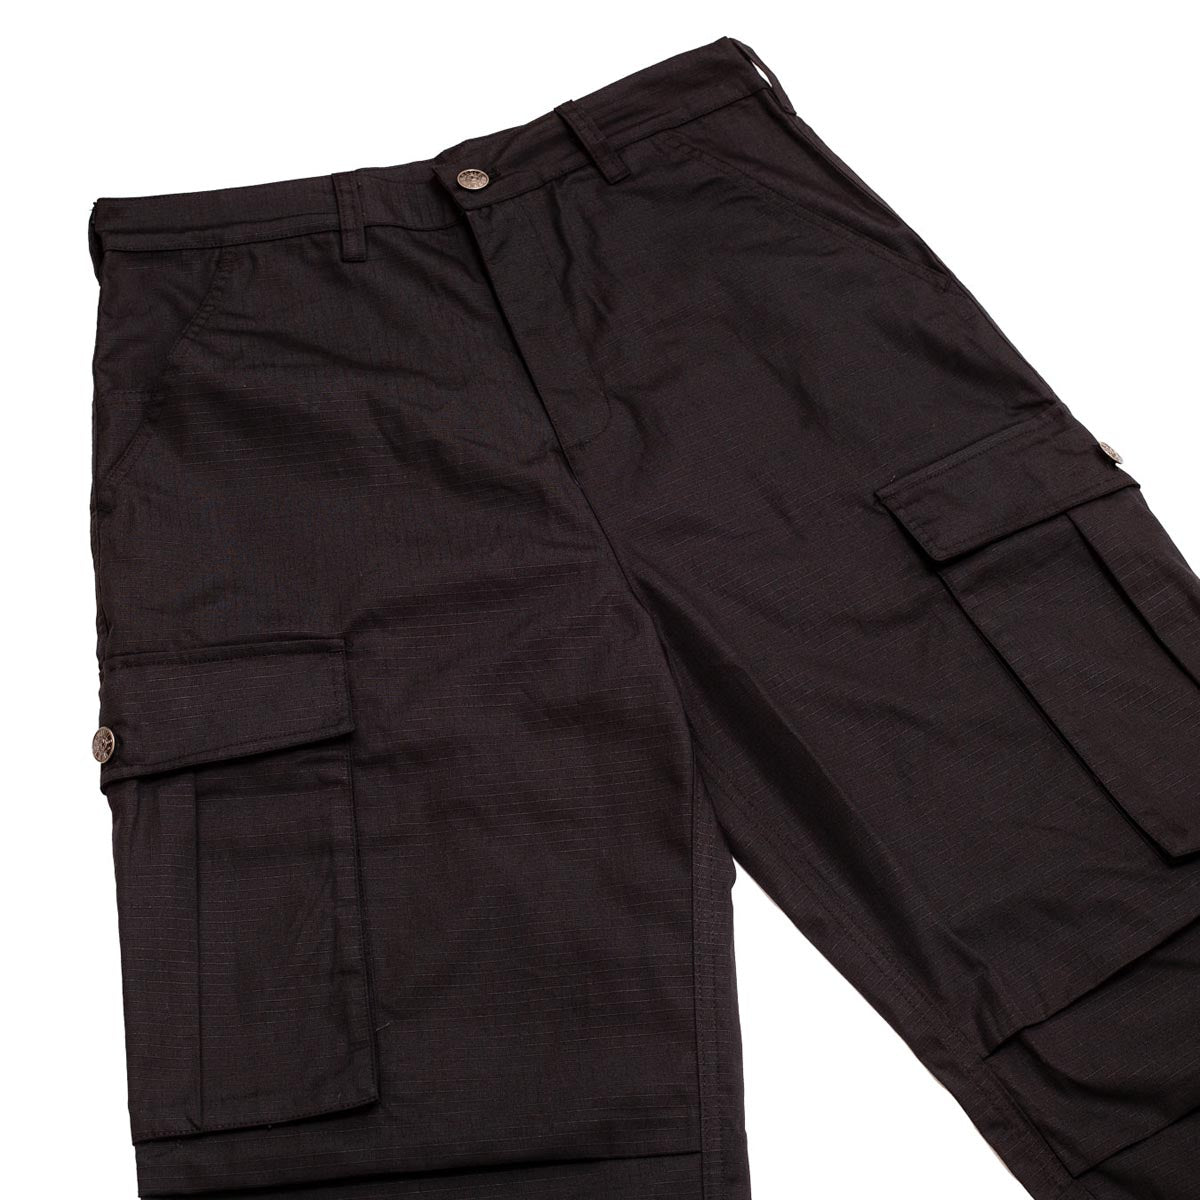 Hoddle Pleated Rip Stop Cargo Pants - Black image 3